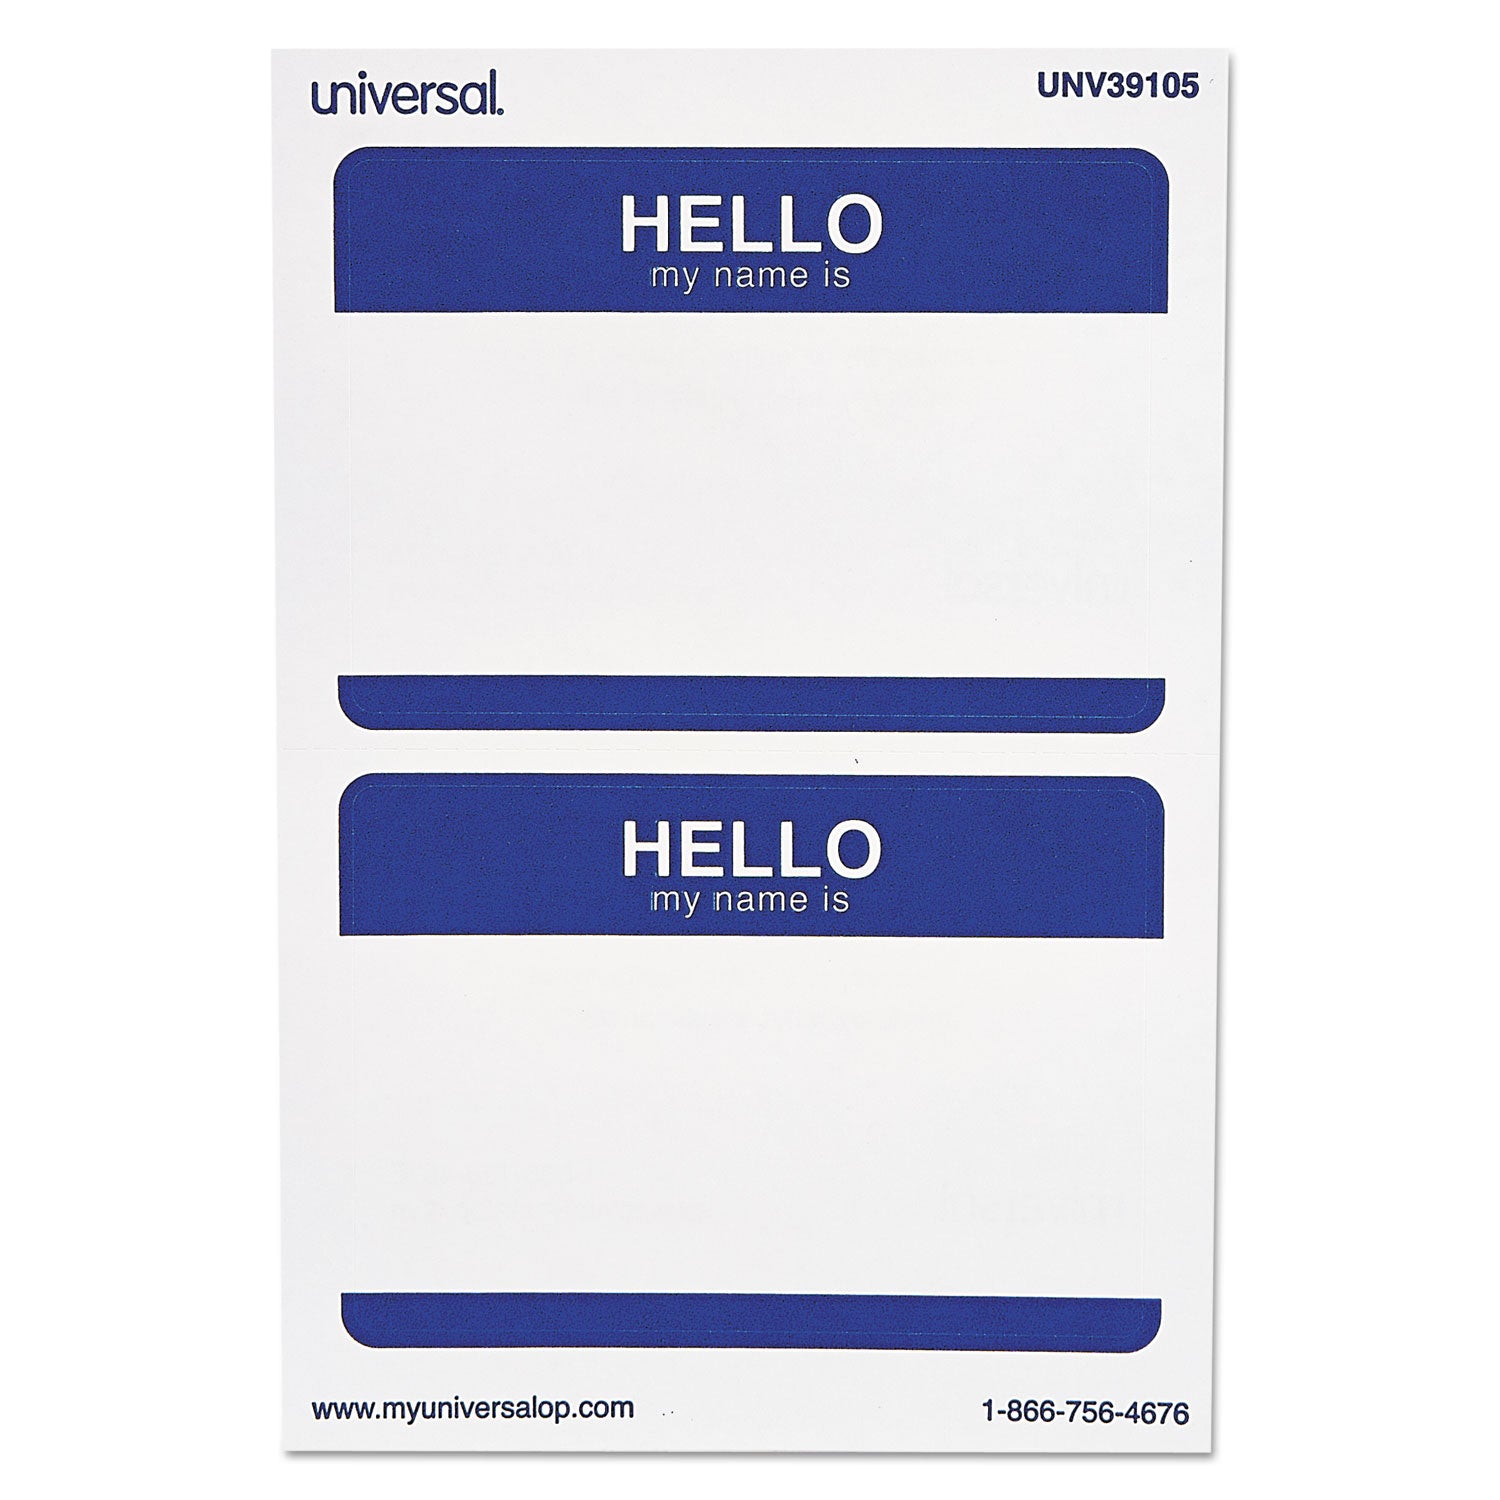 Hello Self-Adhesive Name Badges, 3.5 x 2.25, White/Blue, 100/Pack - 